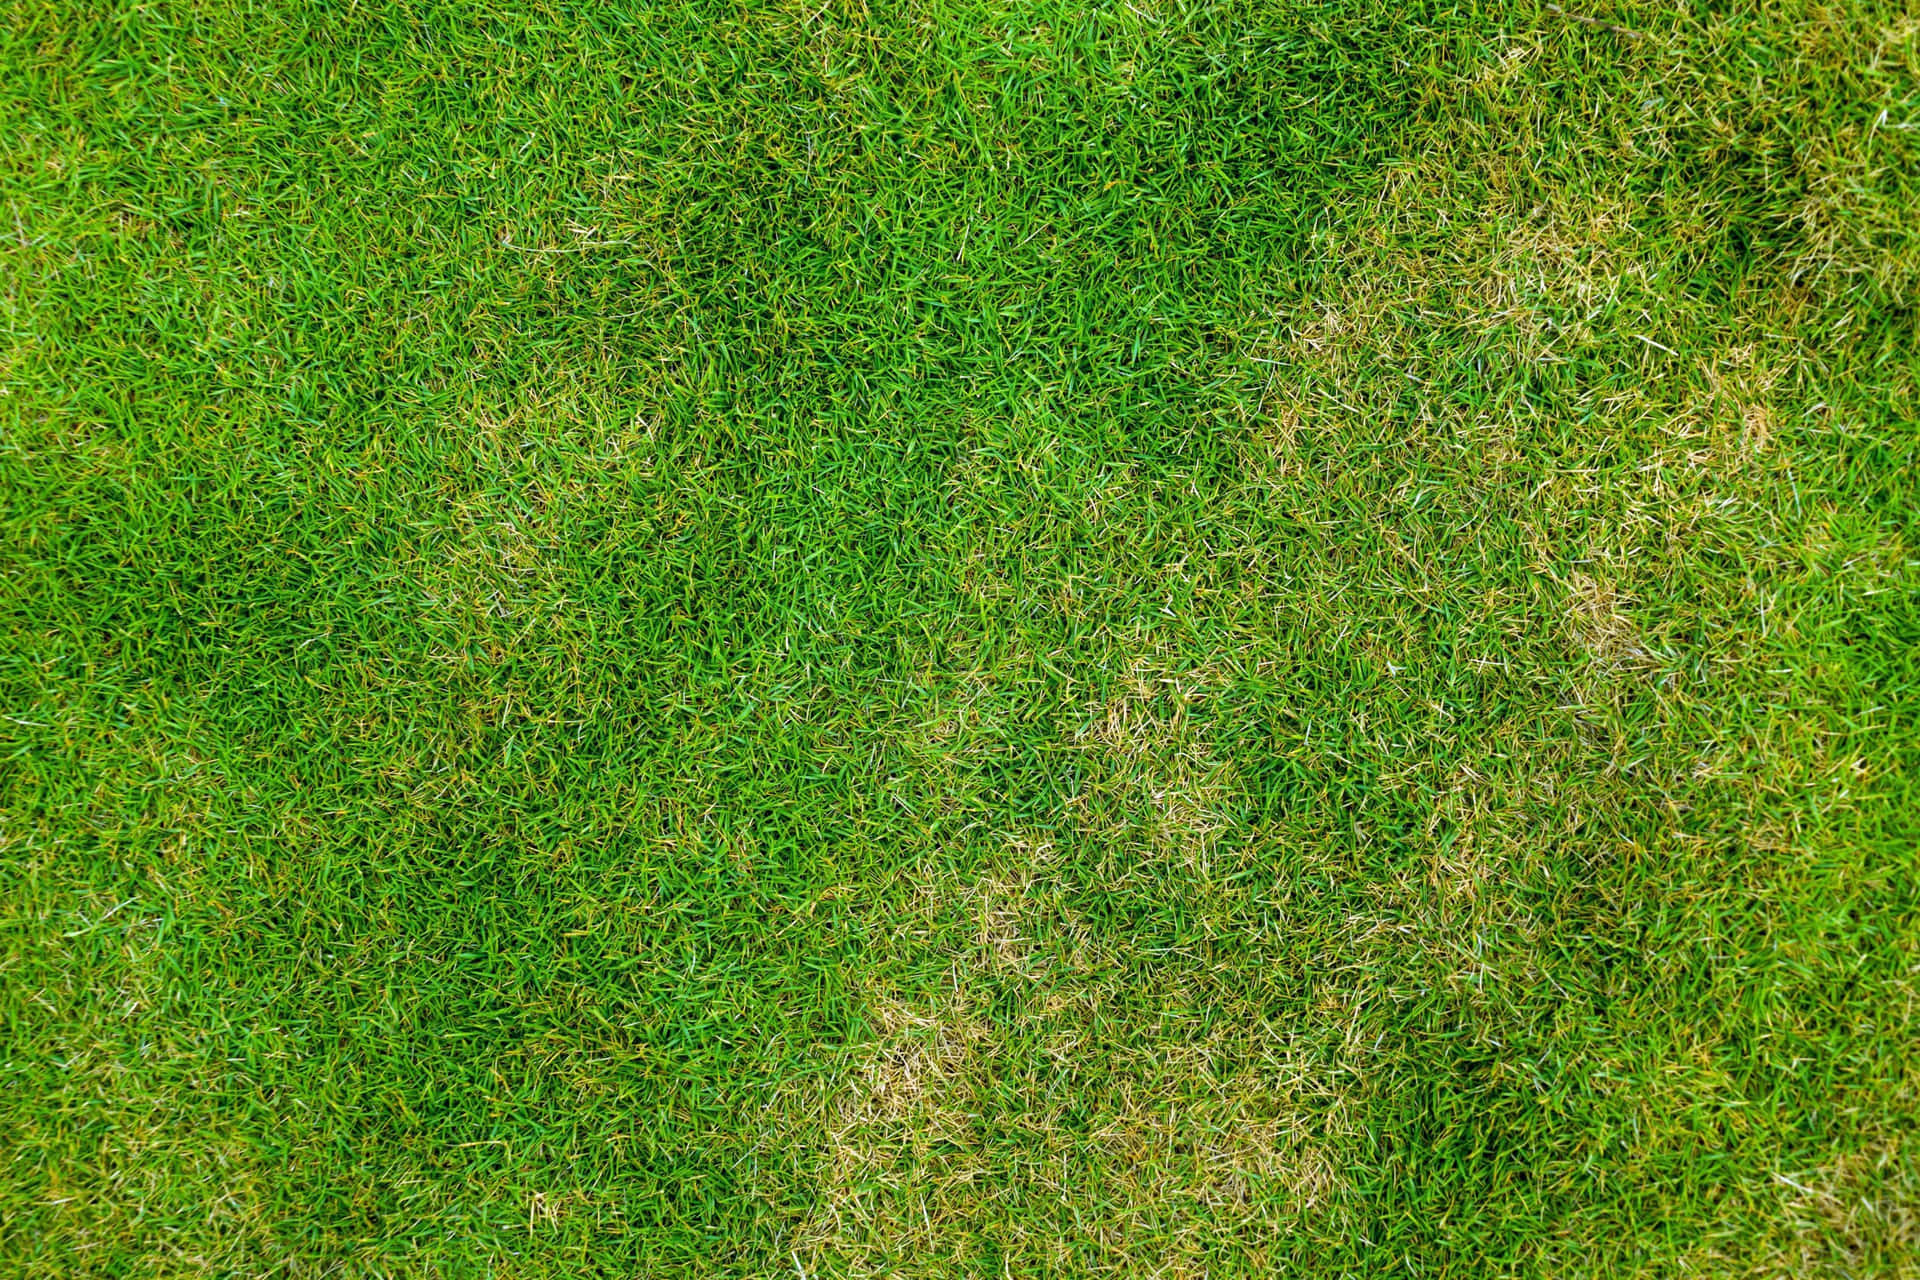 A Pattern of Tall Dark Green Grass Stretching Across the Field